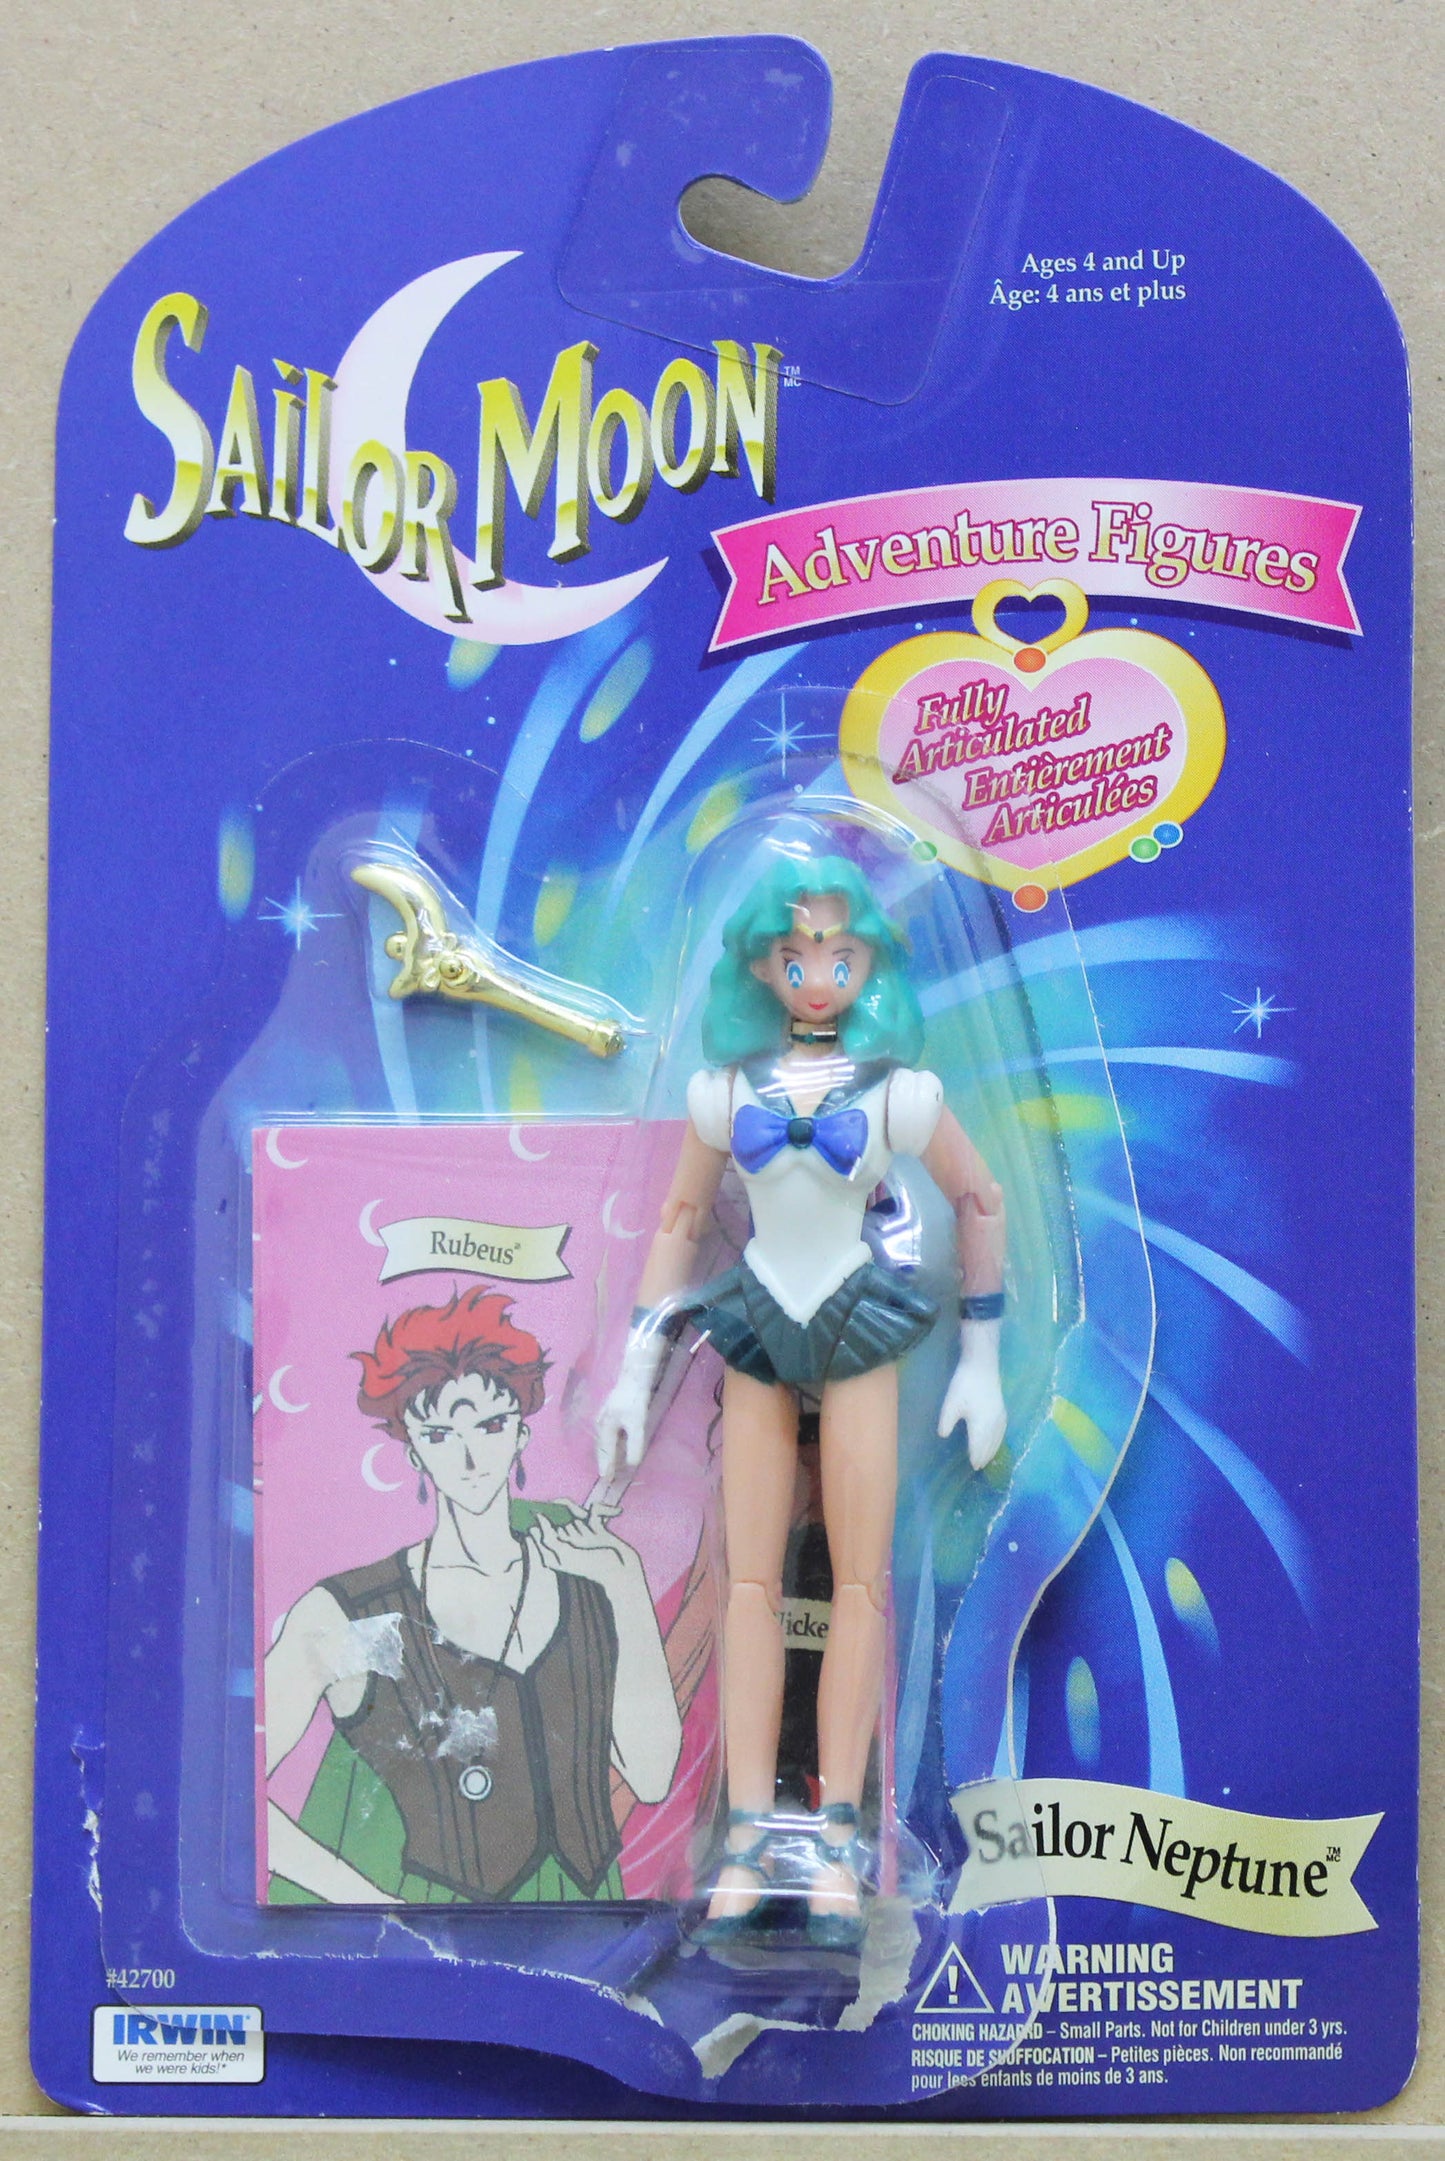 Sailor Moon Adventure Figures (1998)